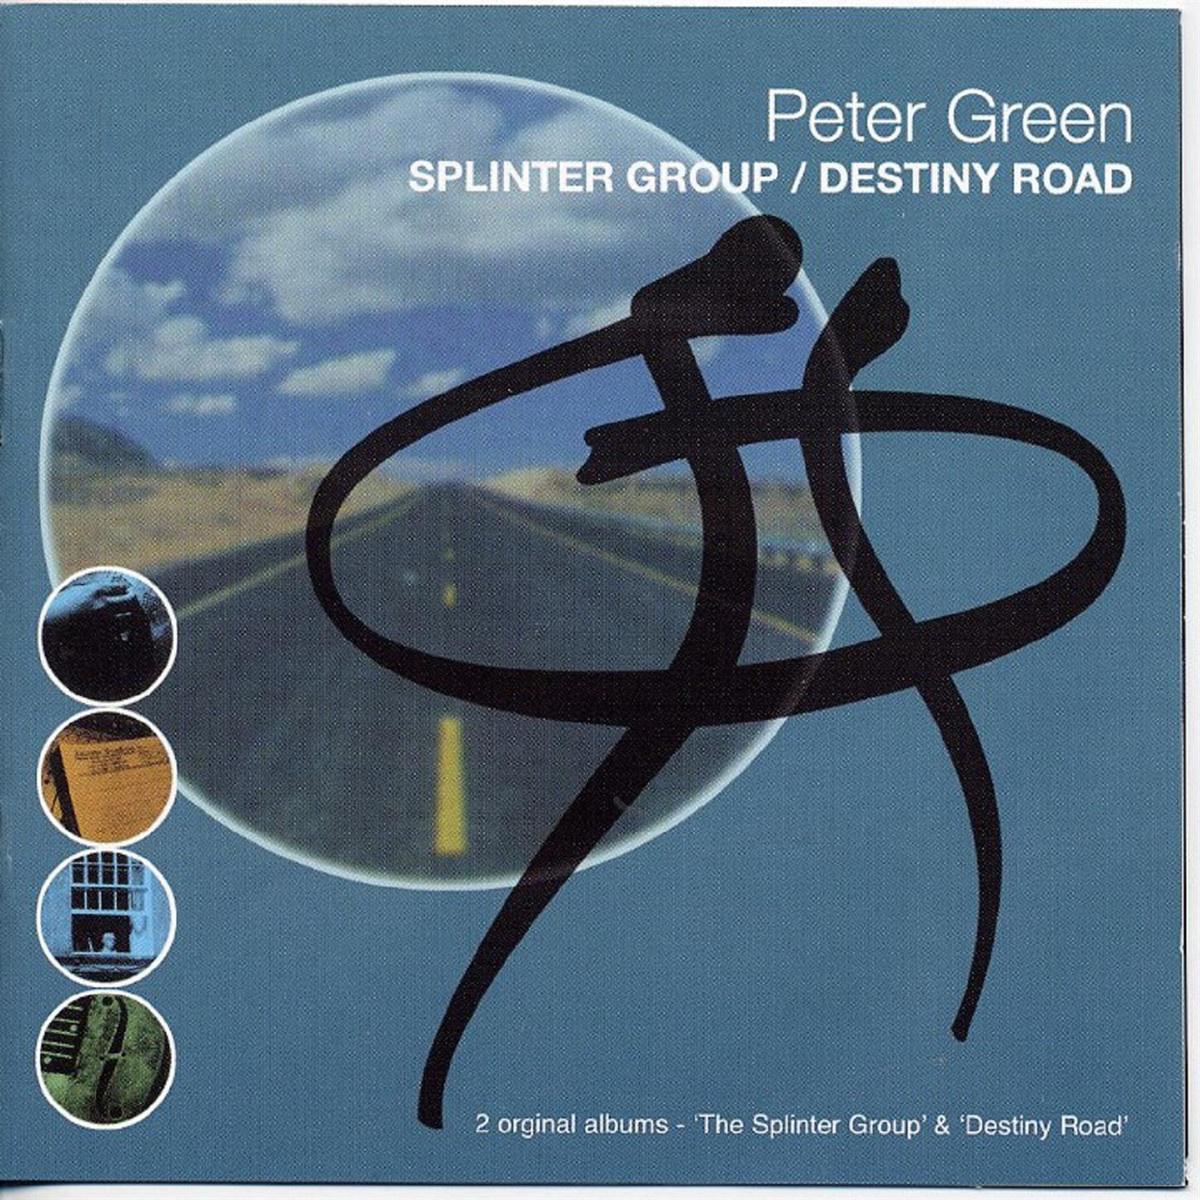 peter green splinter group - burglar